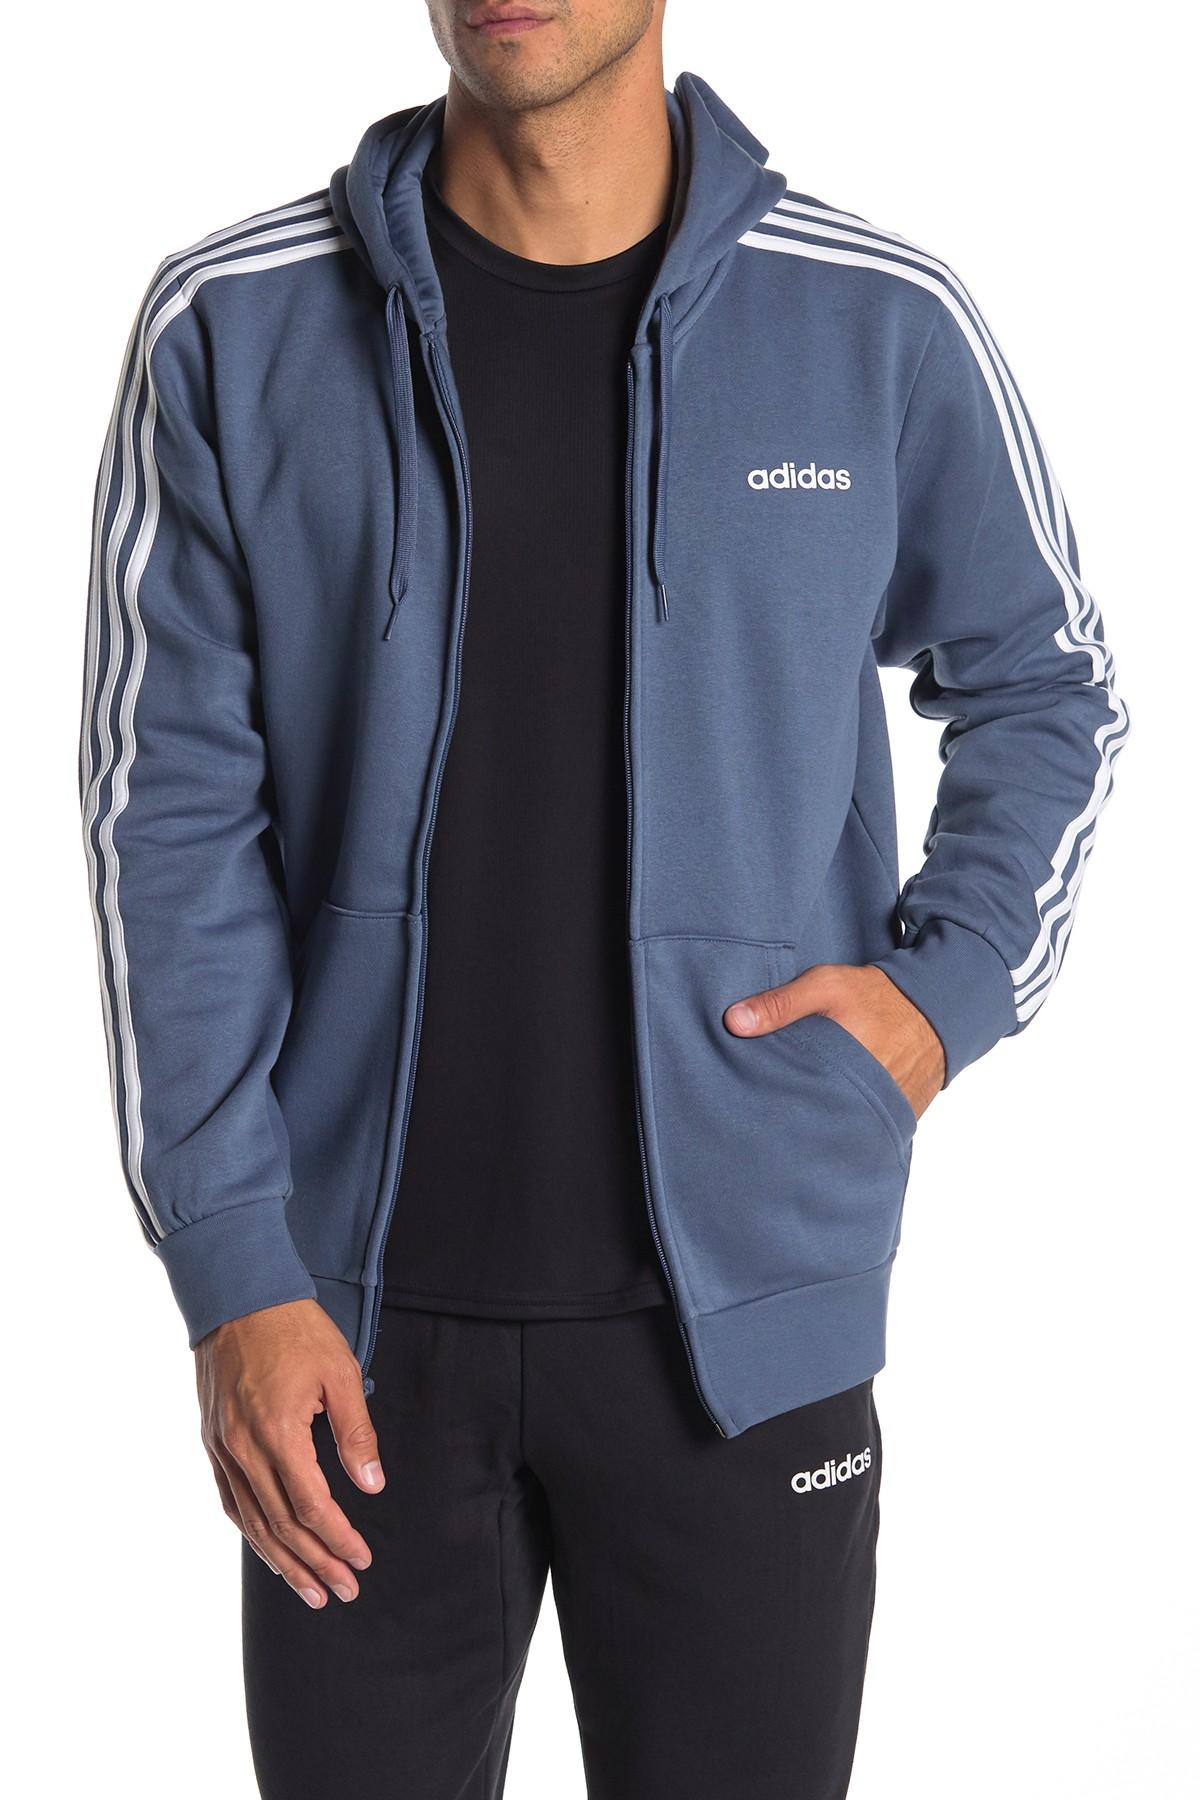 adidas Essentials 3-stripes Full Zip Fleece Hoodie in Blue for Men - Lyst